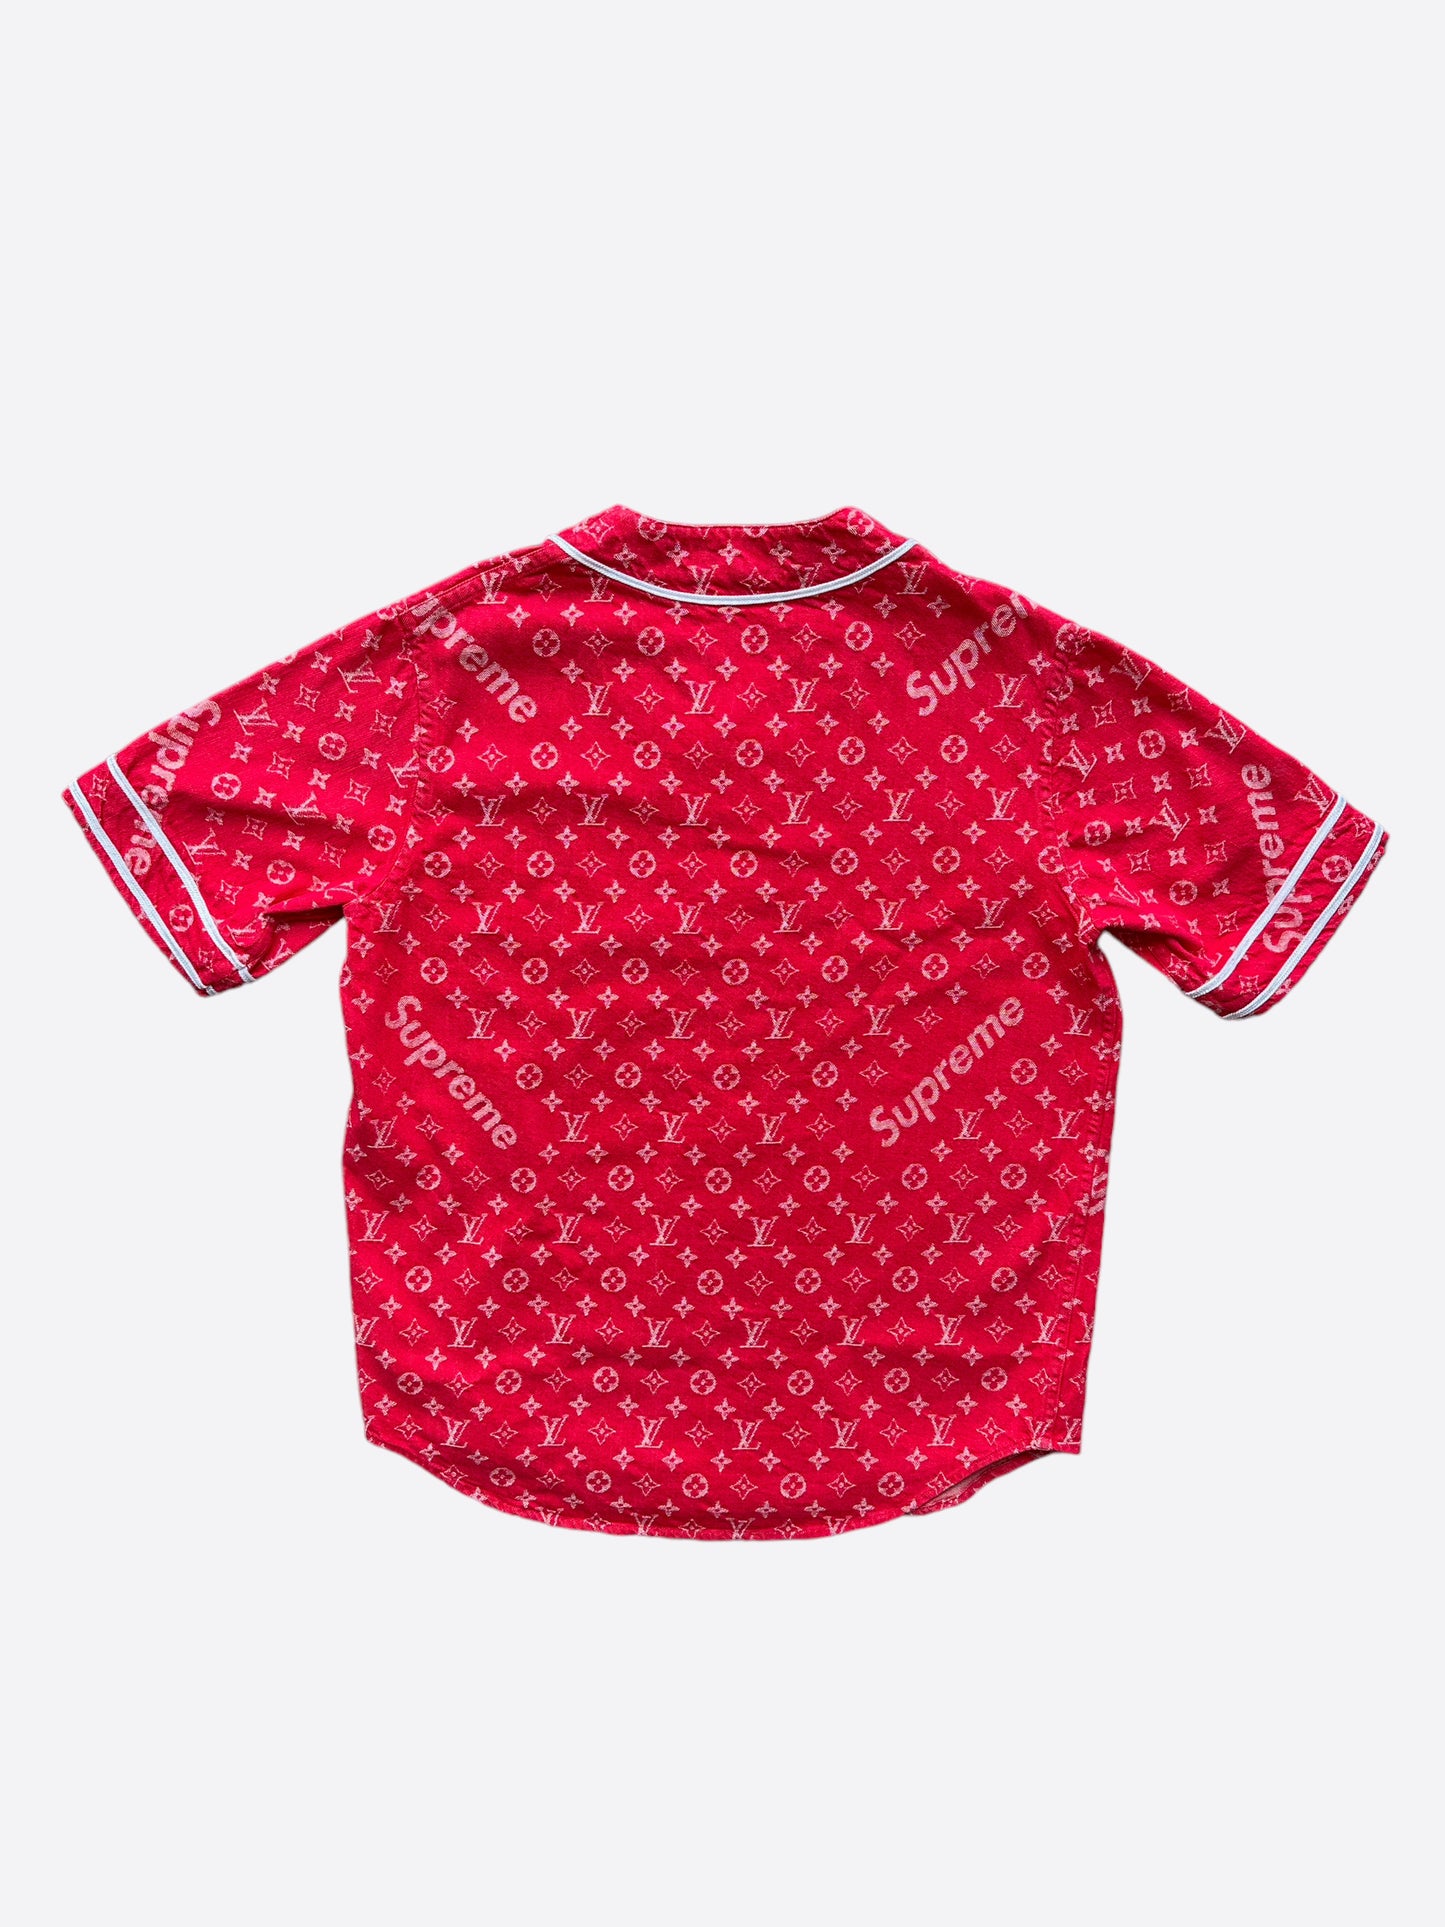 Louis Vuitton, Shirts, Loius Vuitton Baseball T Shirt Size Xxl